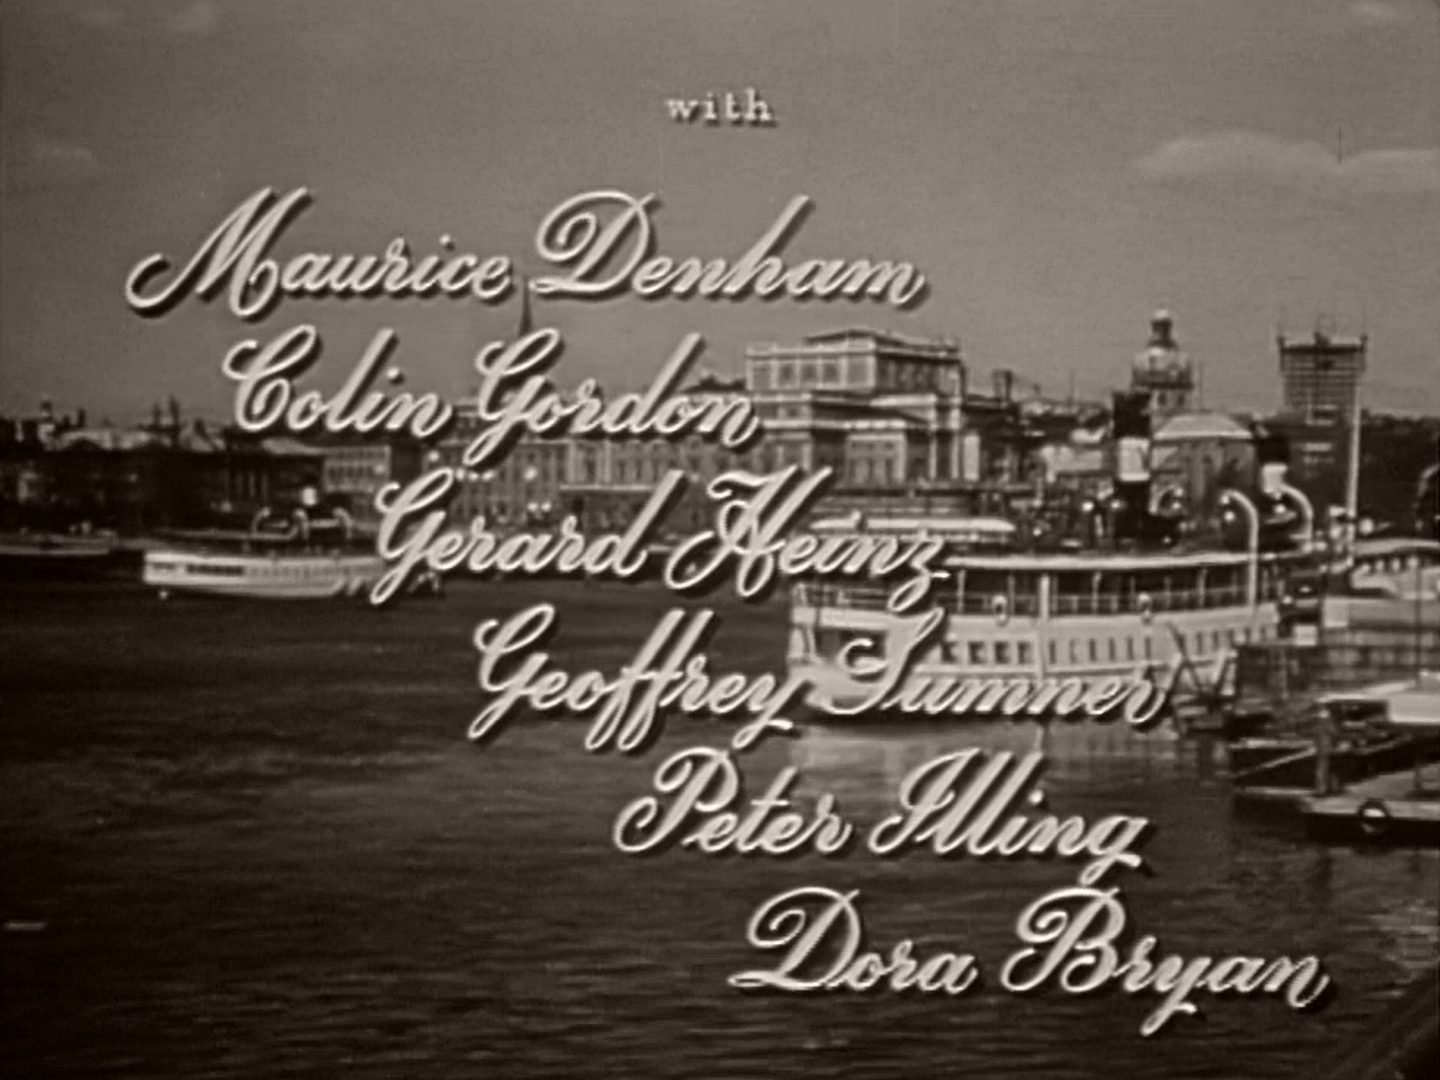 Main title from Traveller’s Joy (1950) (6). With Maurice Denham, Colin Gordon, Gerald Andersen, Geoffrey Sumner, Peter Illing, Dora Bryan